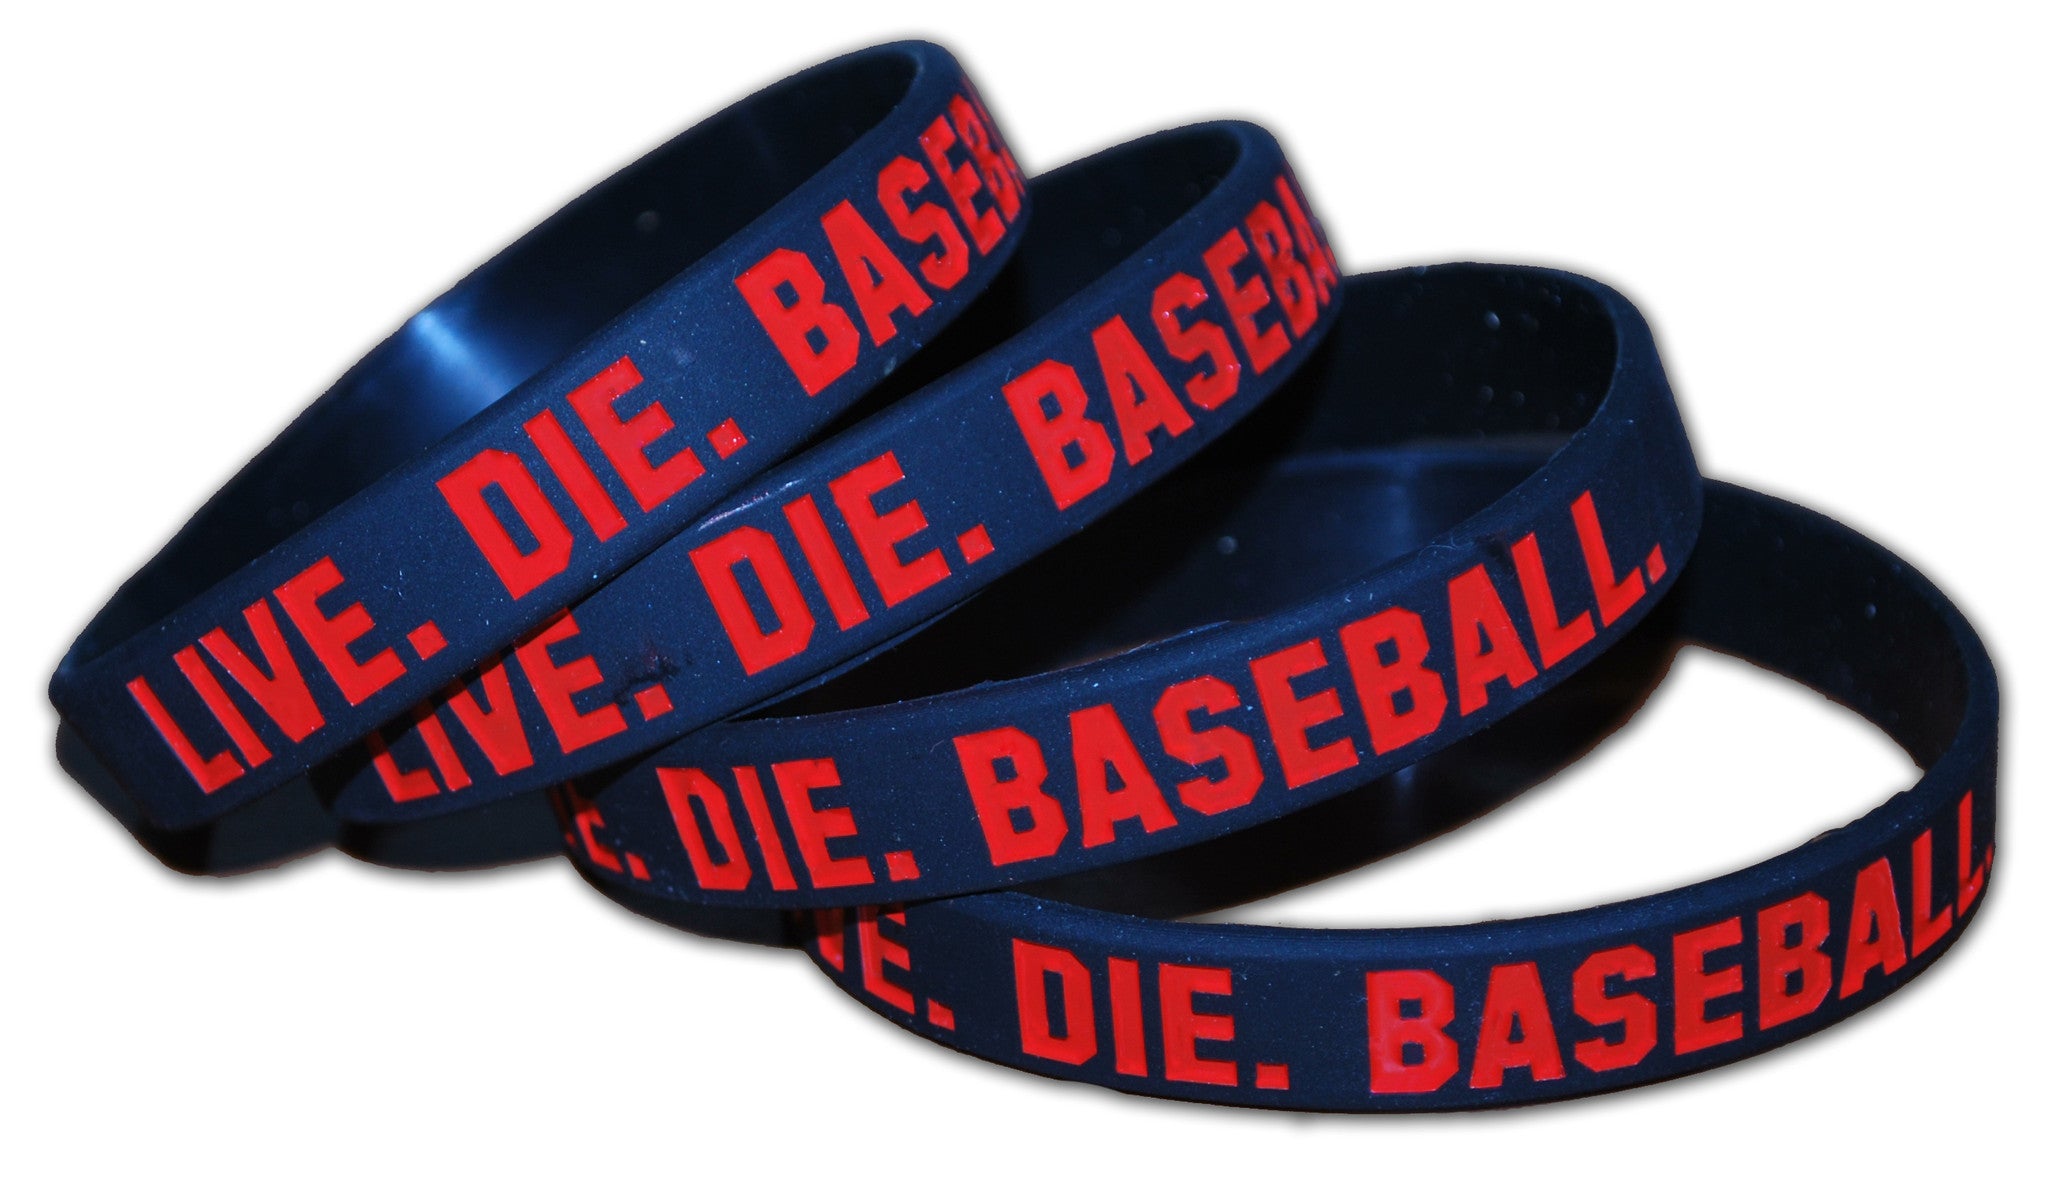 Wholesale Rubber Baseball Bracelets & Baseball Silicone Wristbands